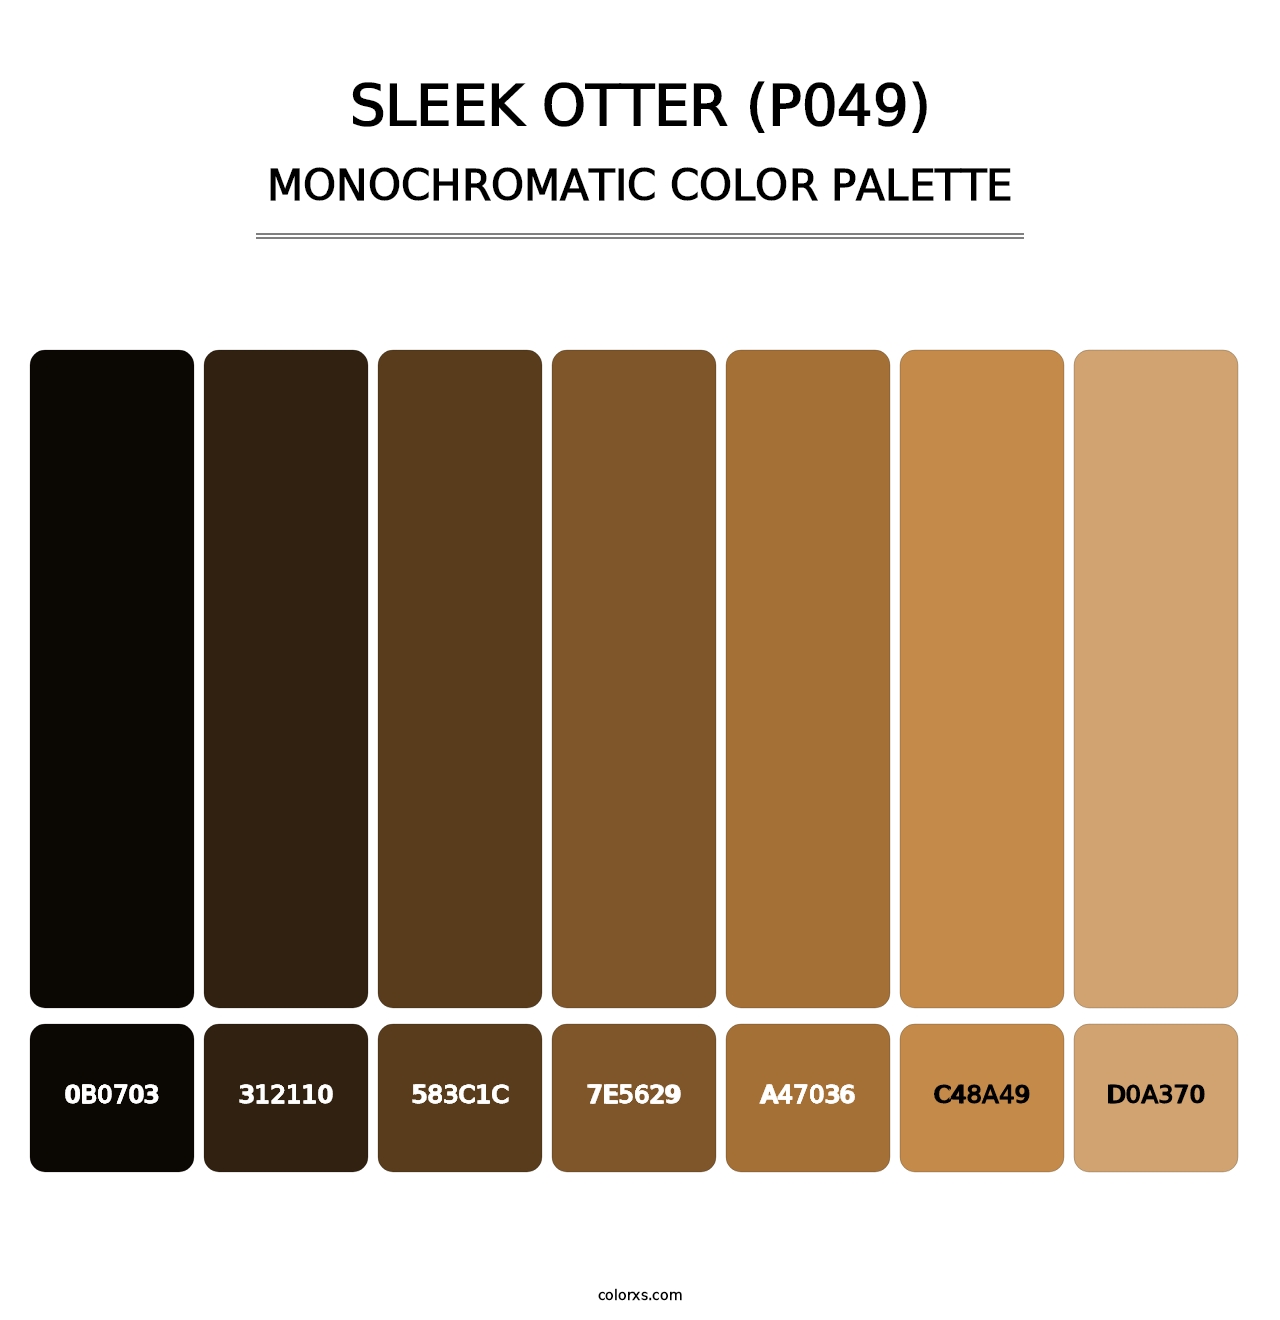 Sleek Otter (P049) - Monochromatic Color Palette